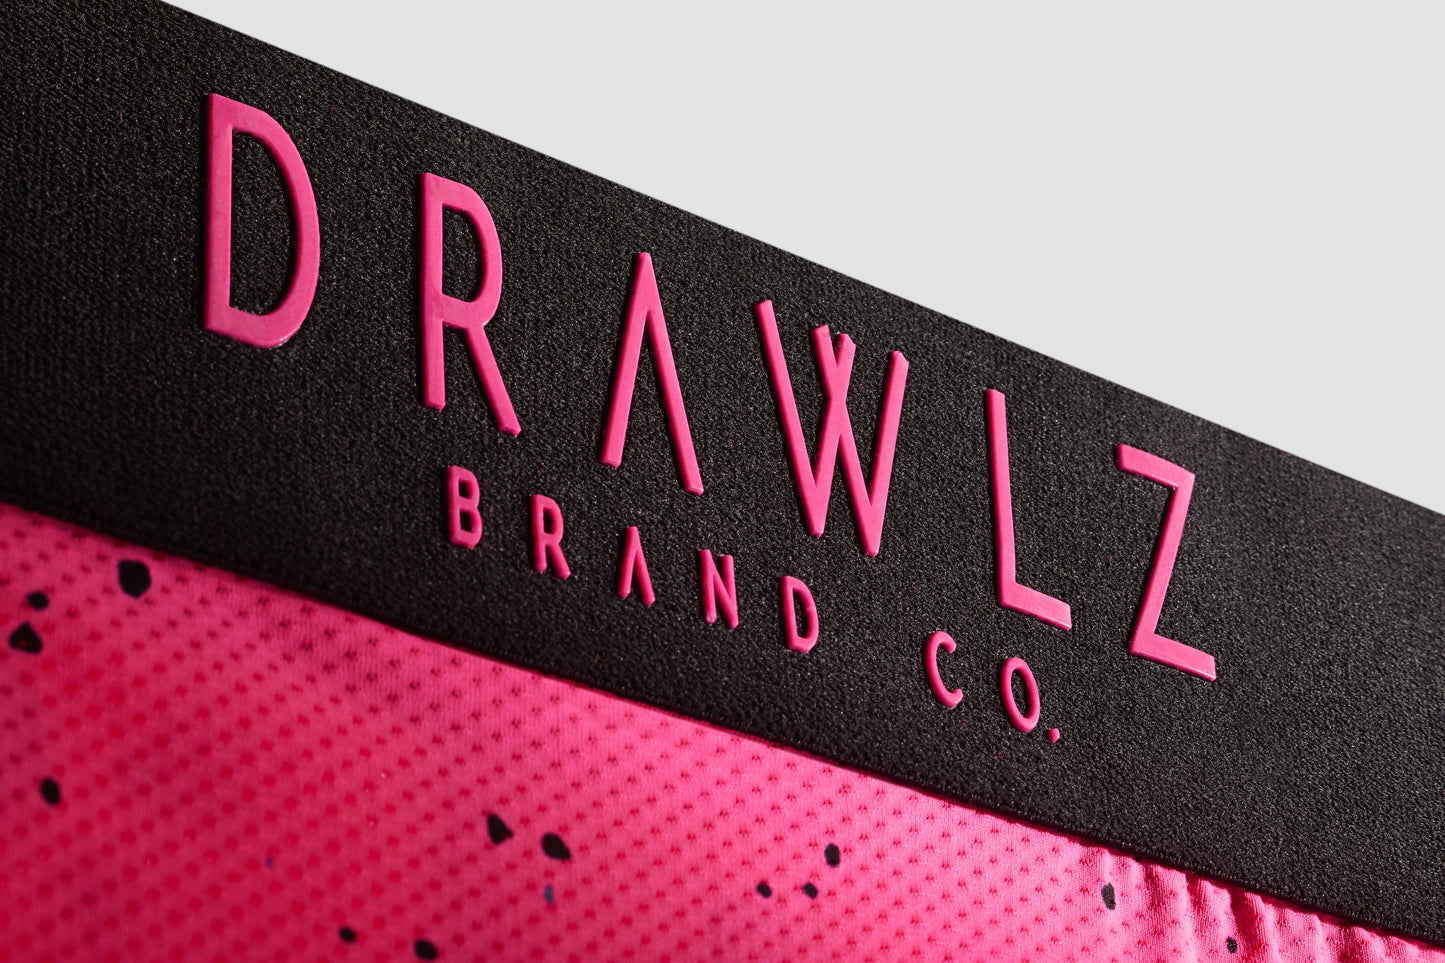 Drawlz Brand Co. , LLC The Pink Pack